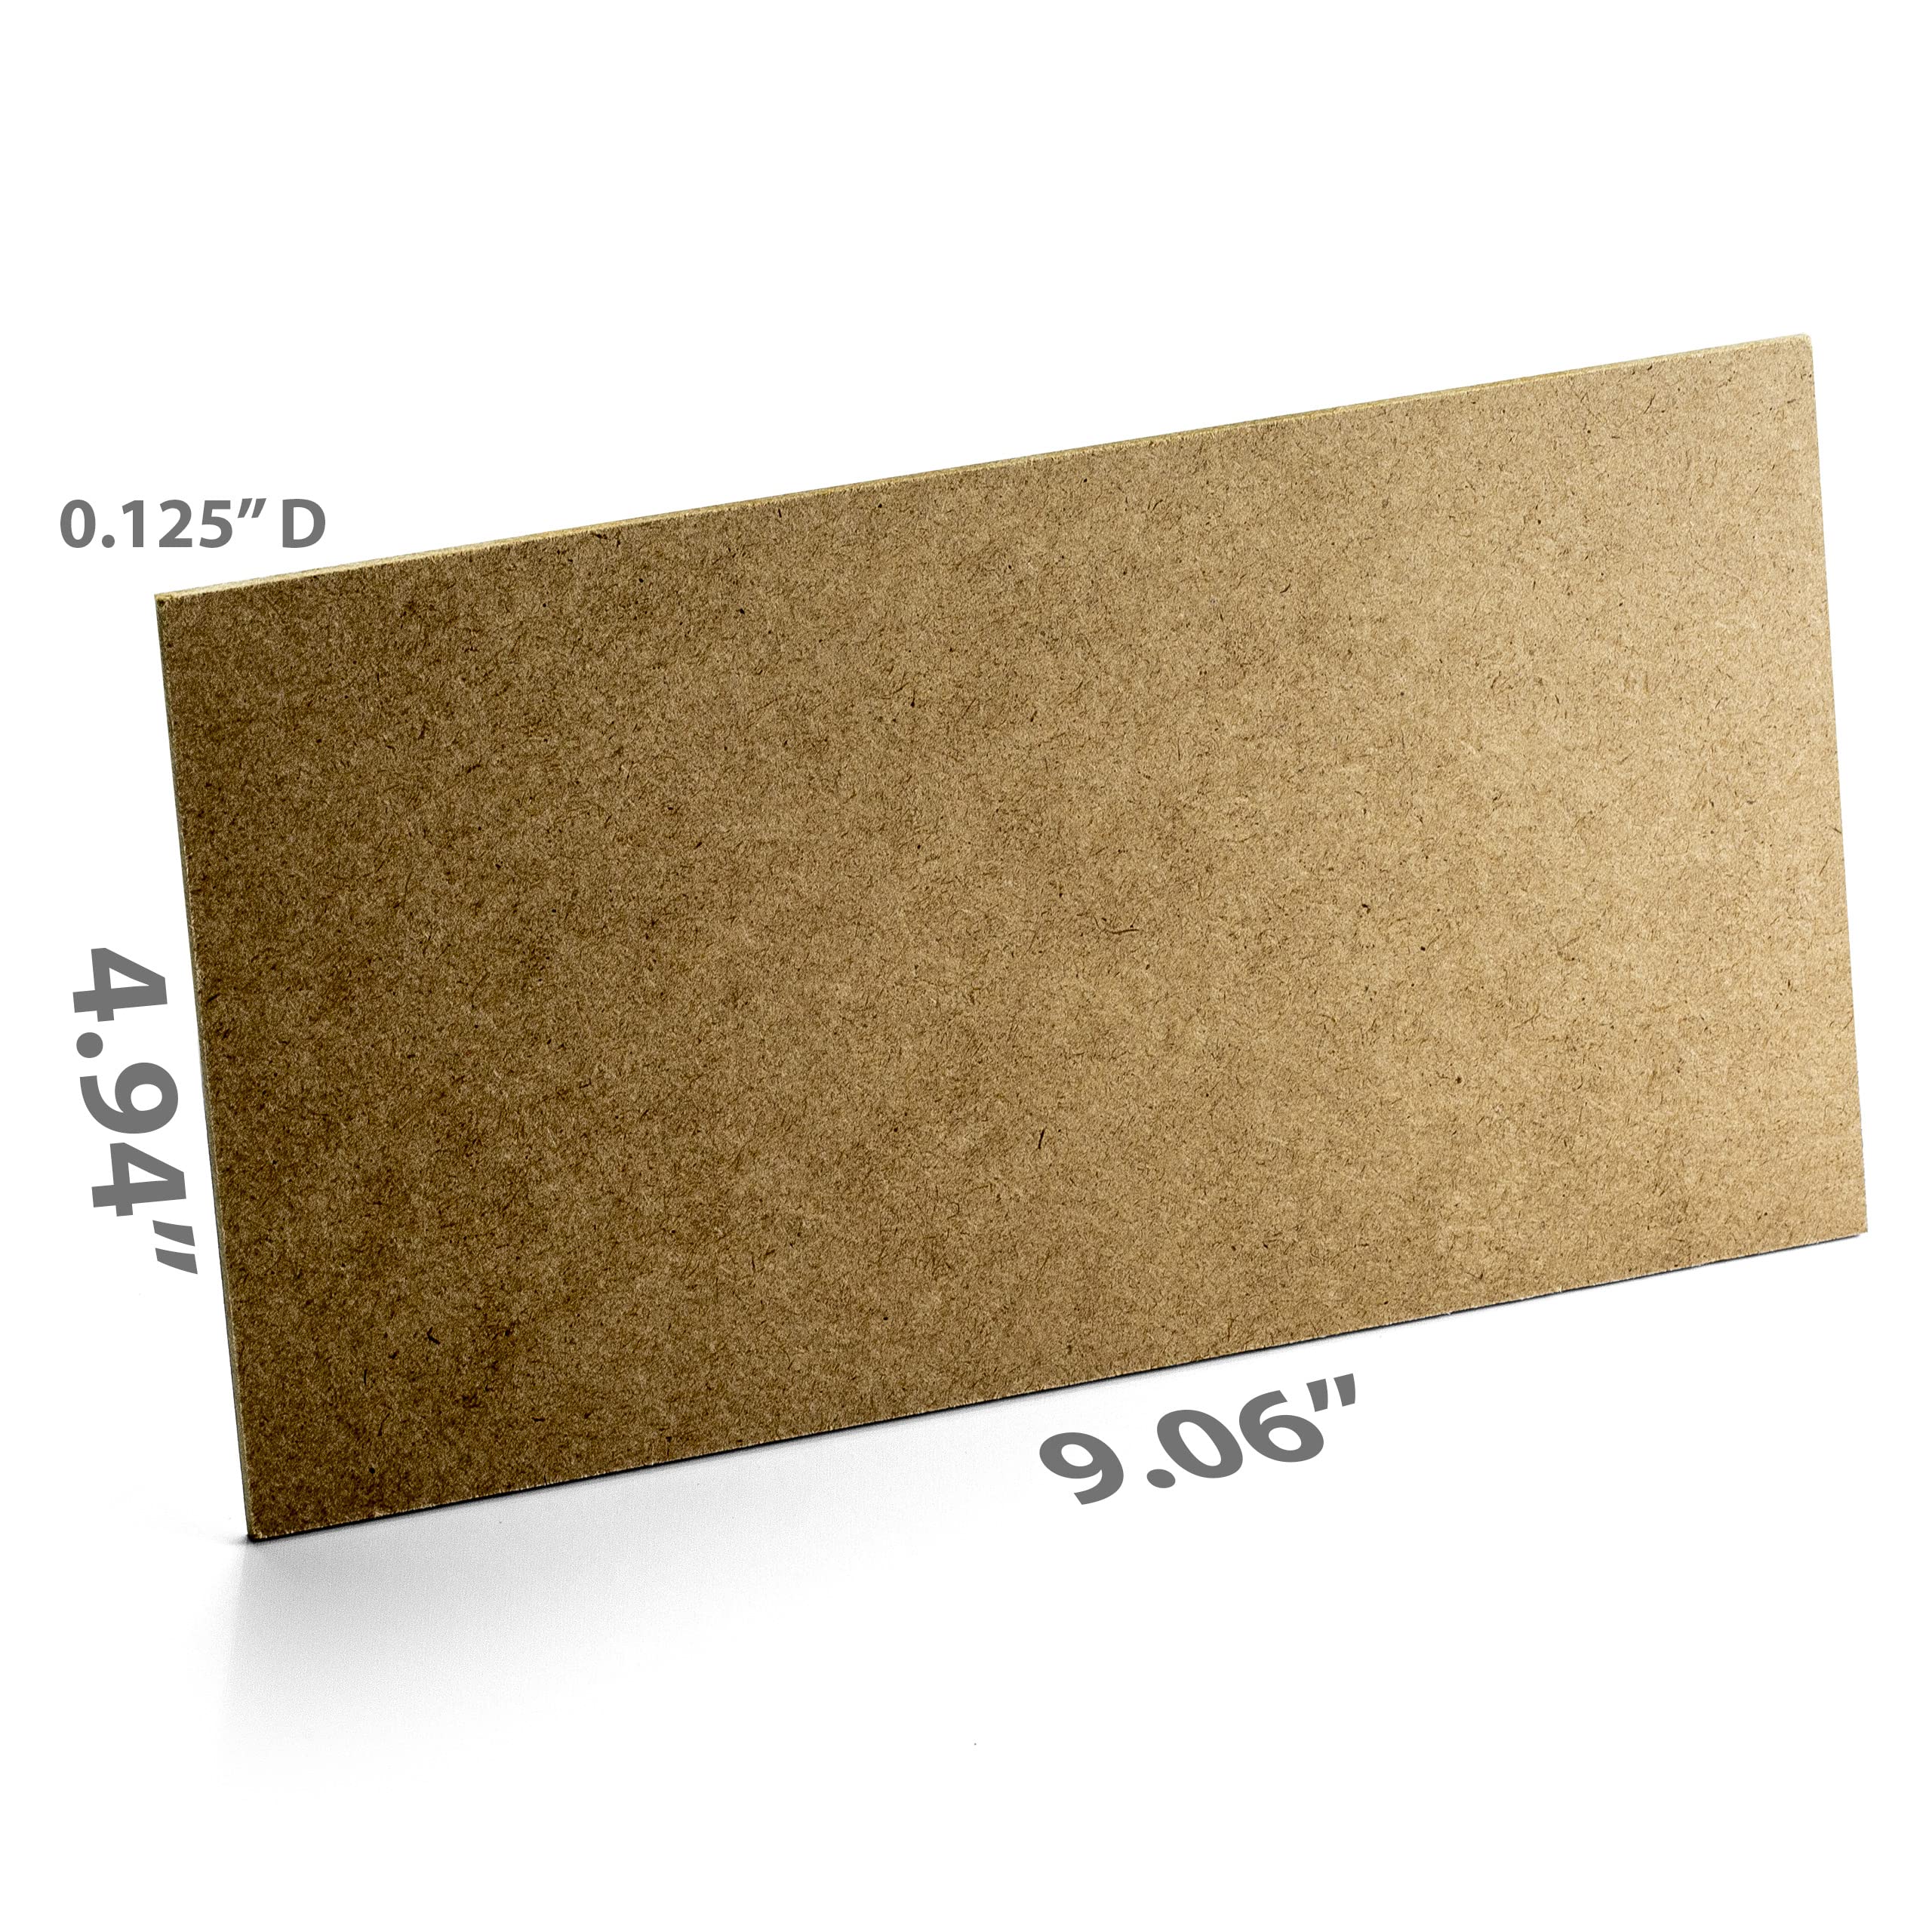 Officemate 5”x9” MDF Board for Crafts, Medium Density Fiberboard, Board 1/8 Inch Thick, Hardwood Board 20PK (83154),Brown